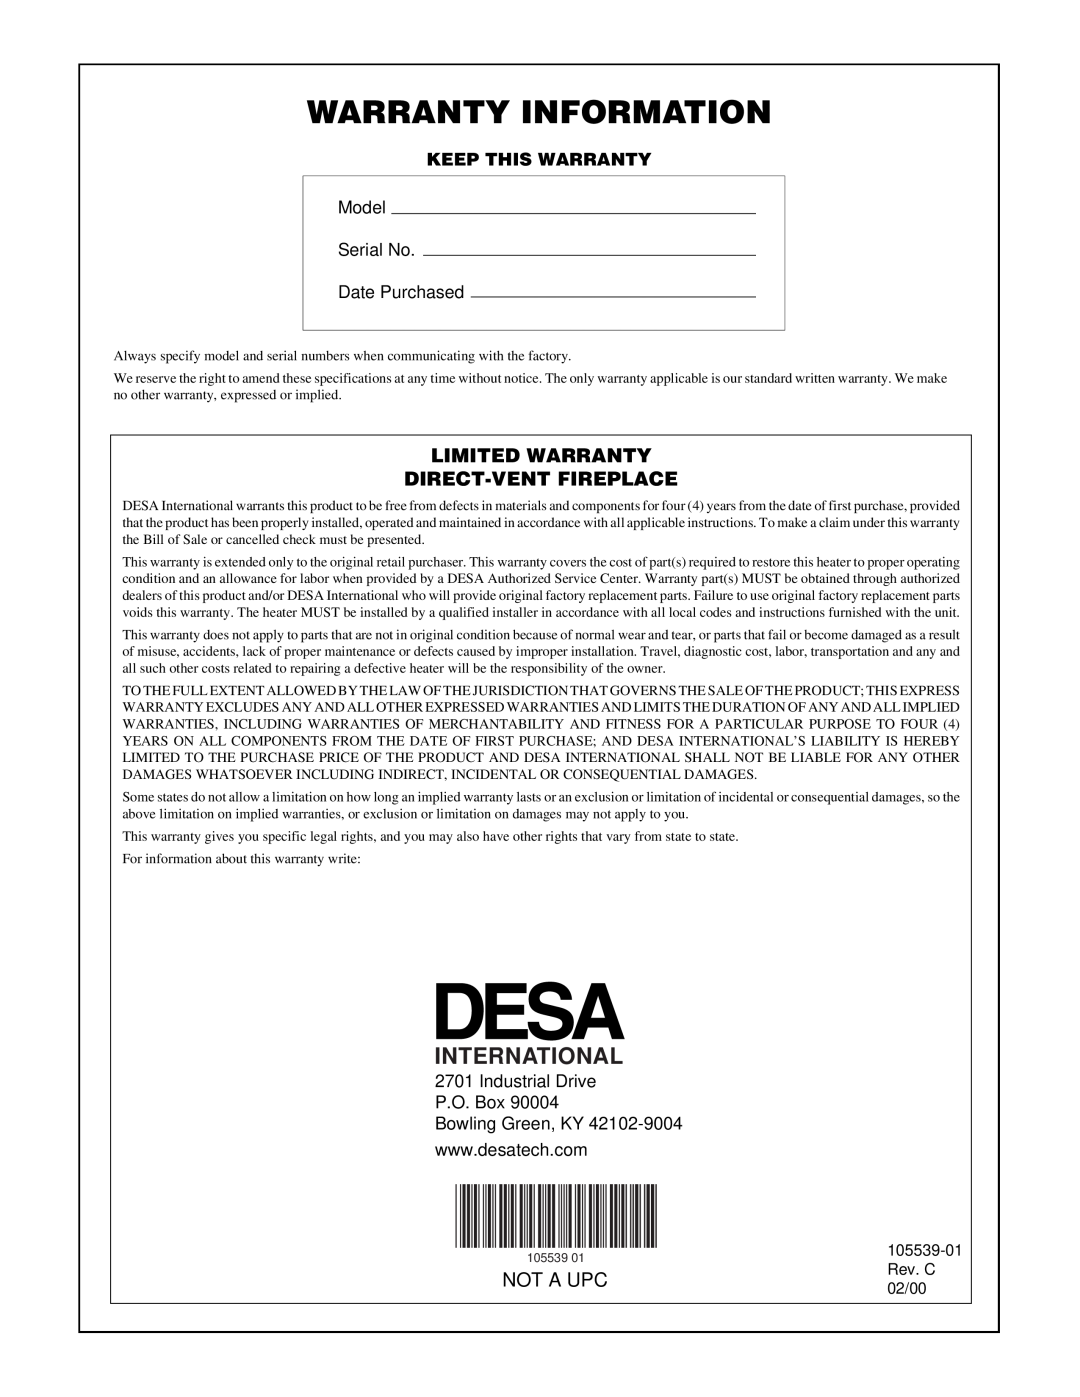 Desa DDV37N/P, BDV41N/P, BDV37N/P, B) Warranty Information, International, Limited Warranty Direct-Ventfireplace, Not A Upc 